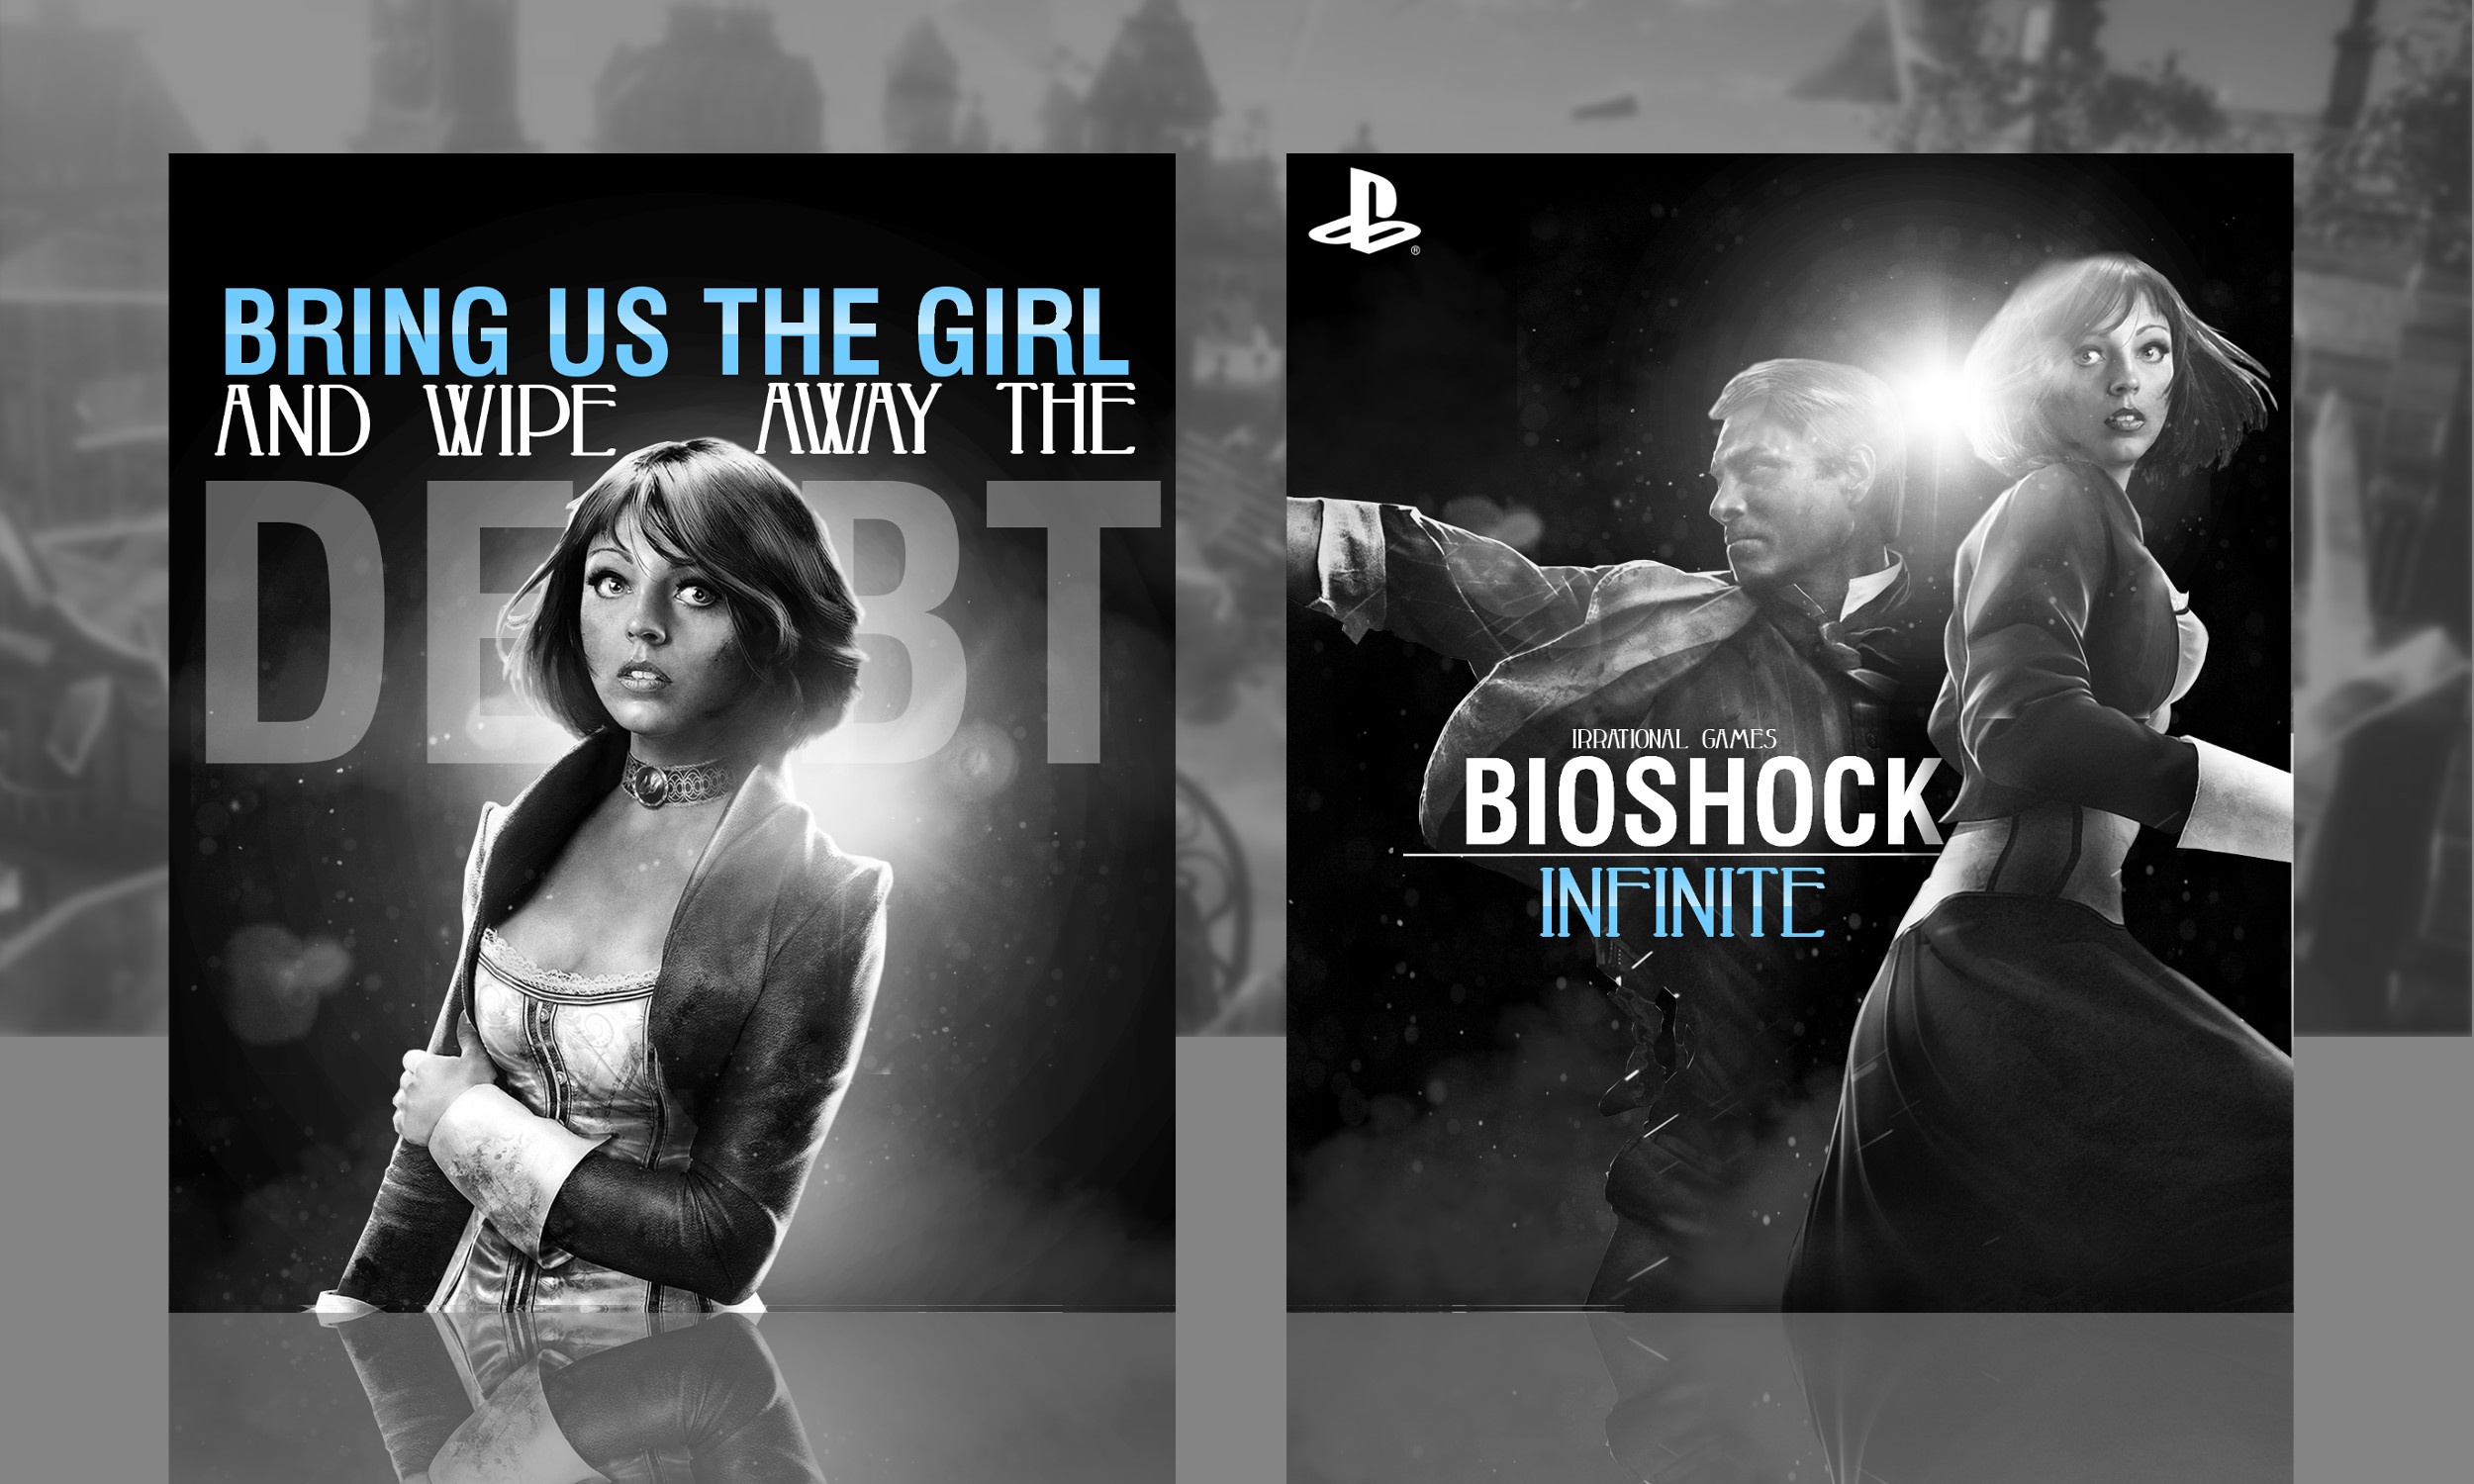 BioShock Infinite box cover